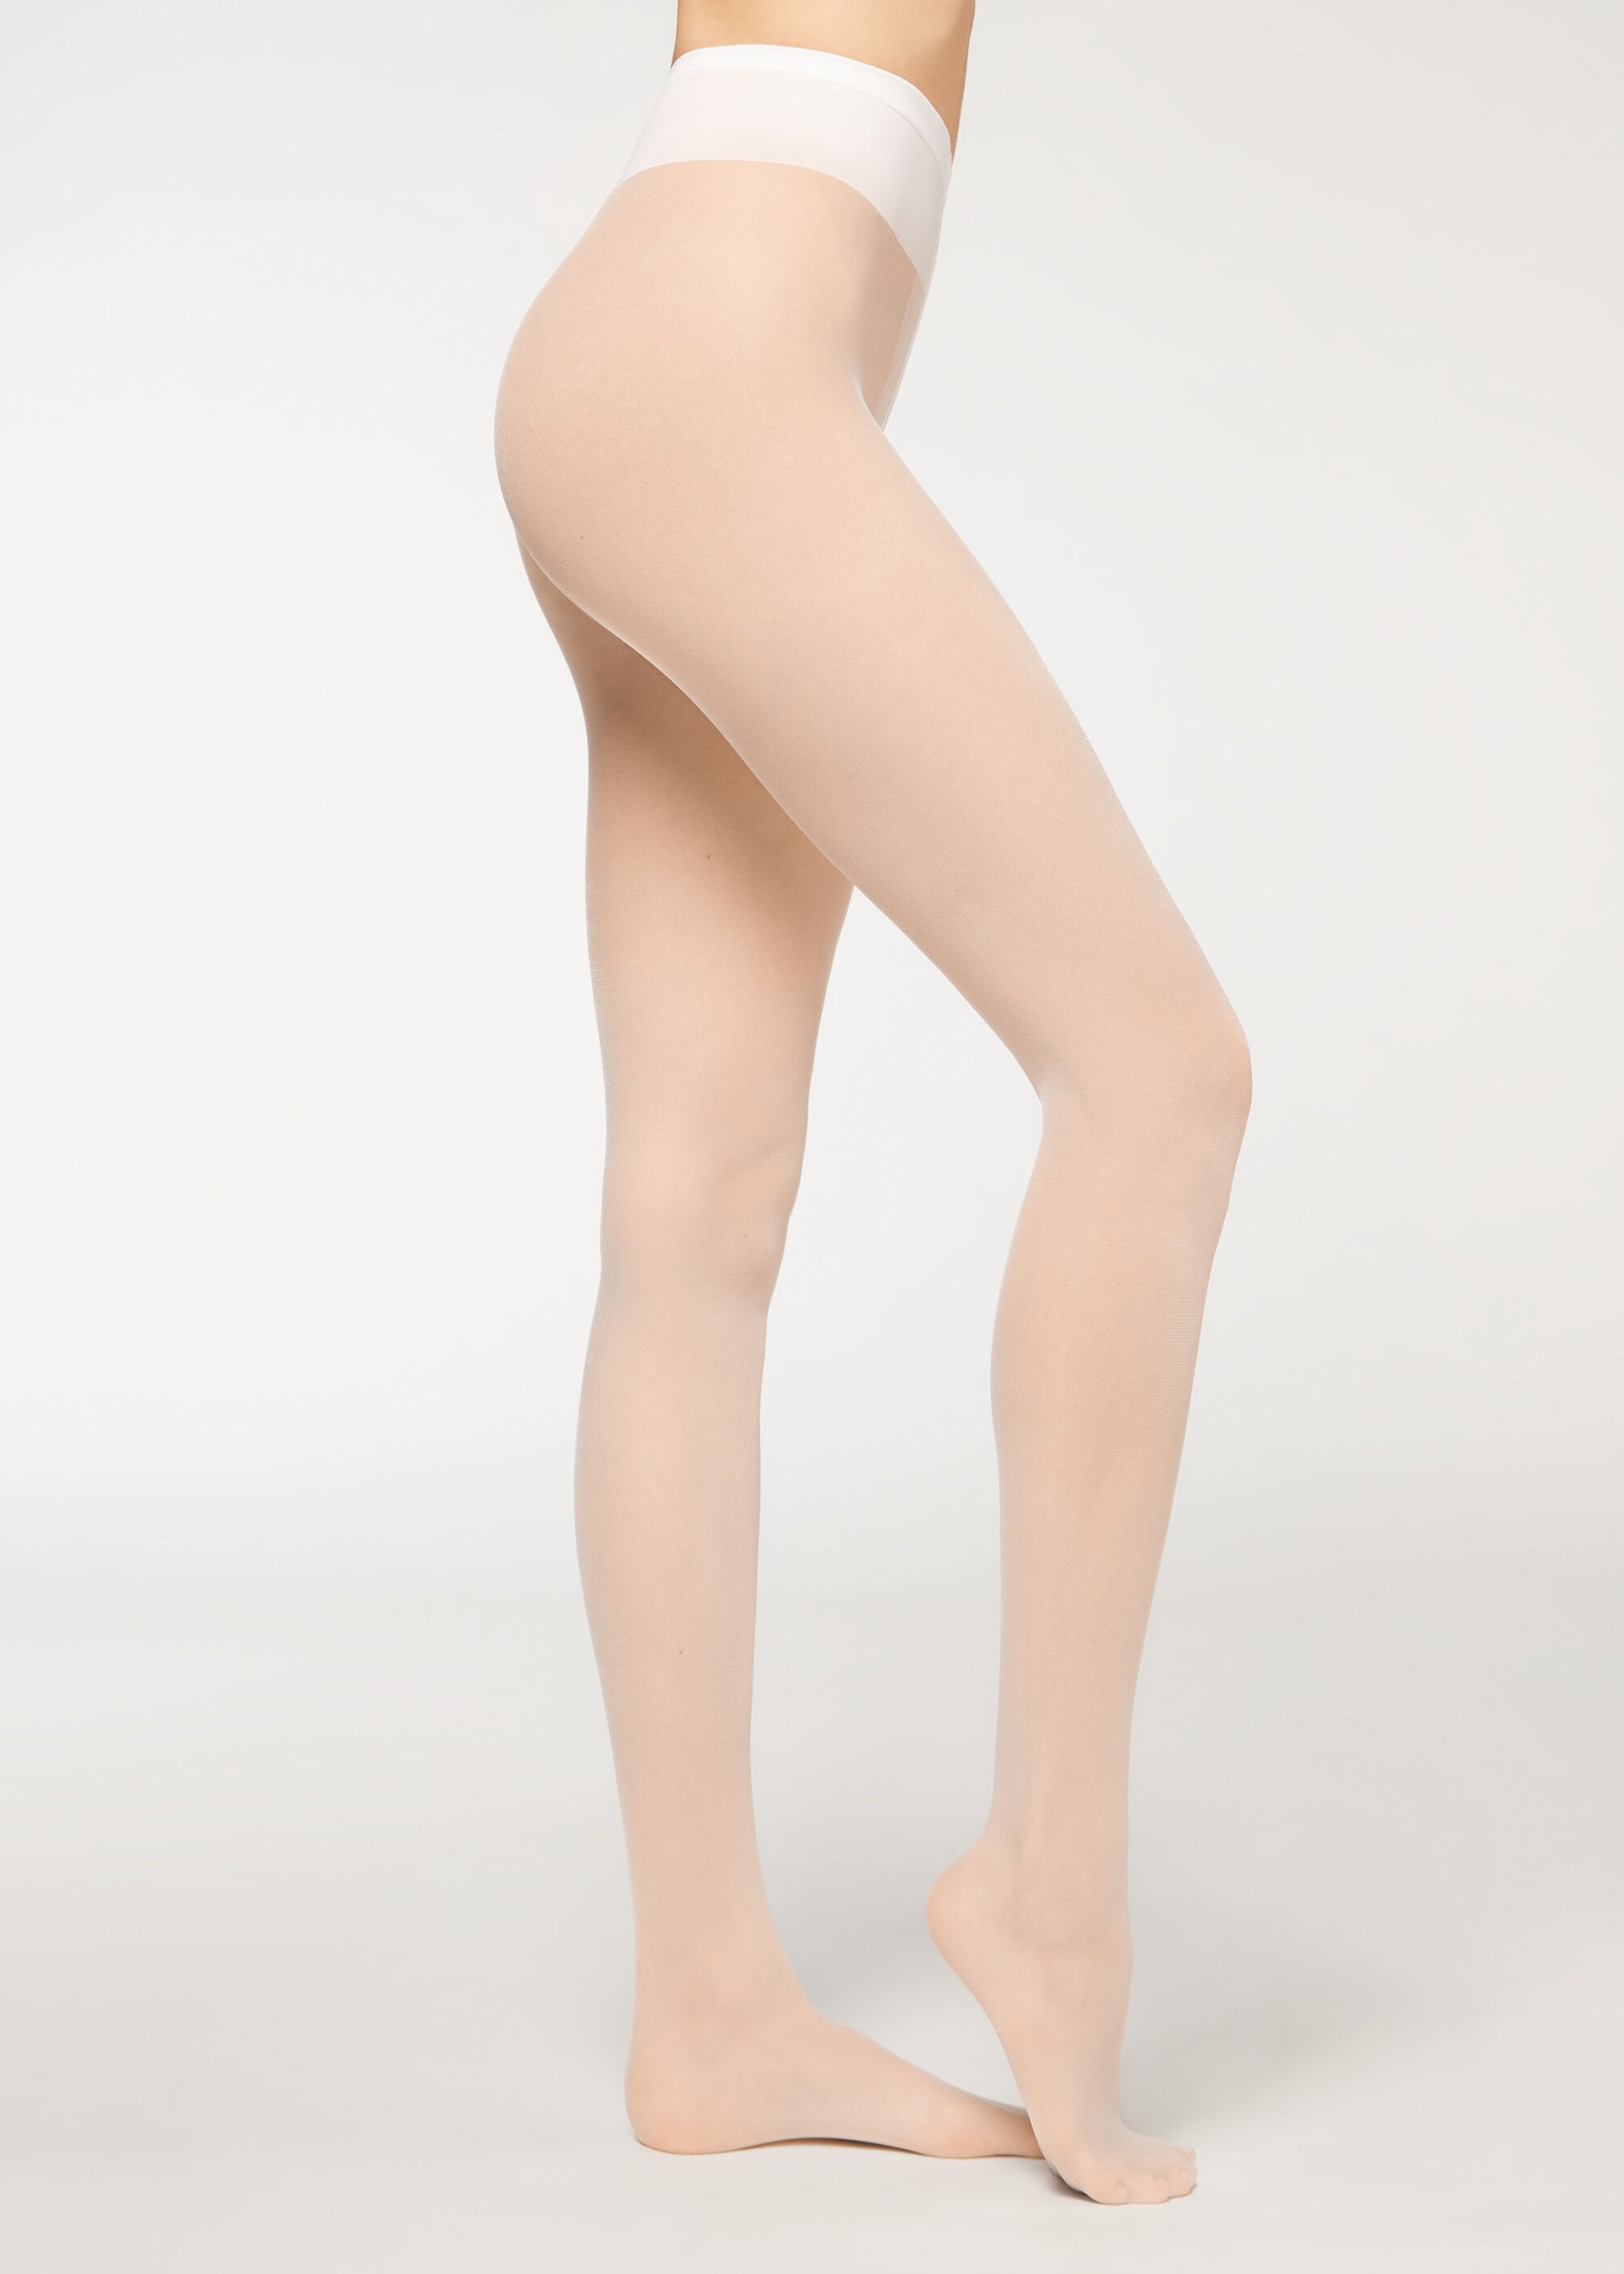 6 Pack Nylon Spandex Thong Underwear - Kalon Clothing